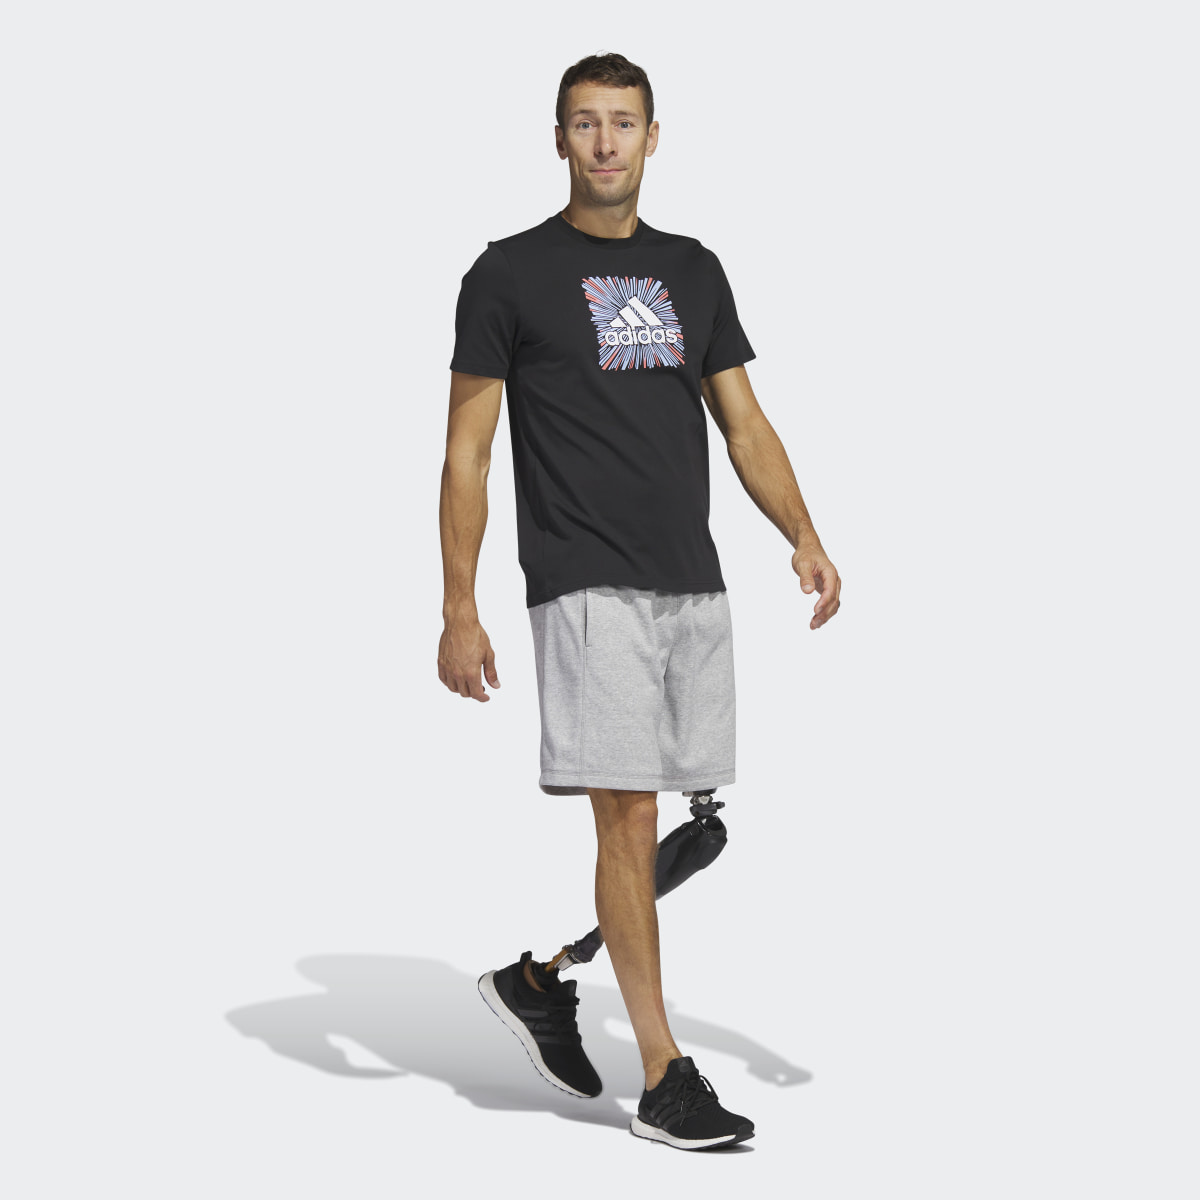 Adidas Sport Optimist Sun Logo Sportswear Graphic T-Shirt (Short Sleeve). 4